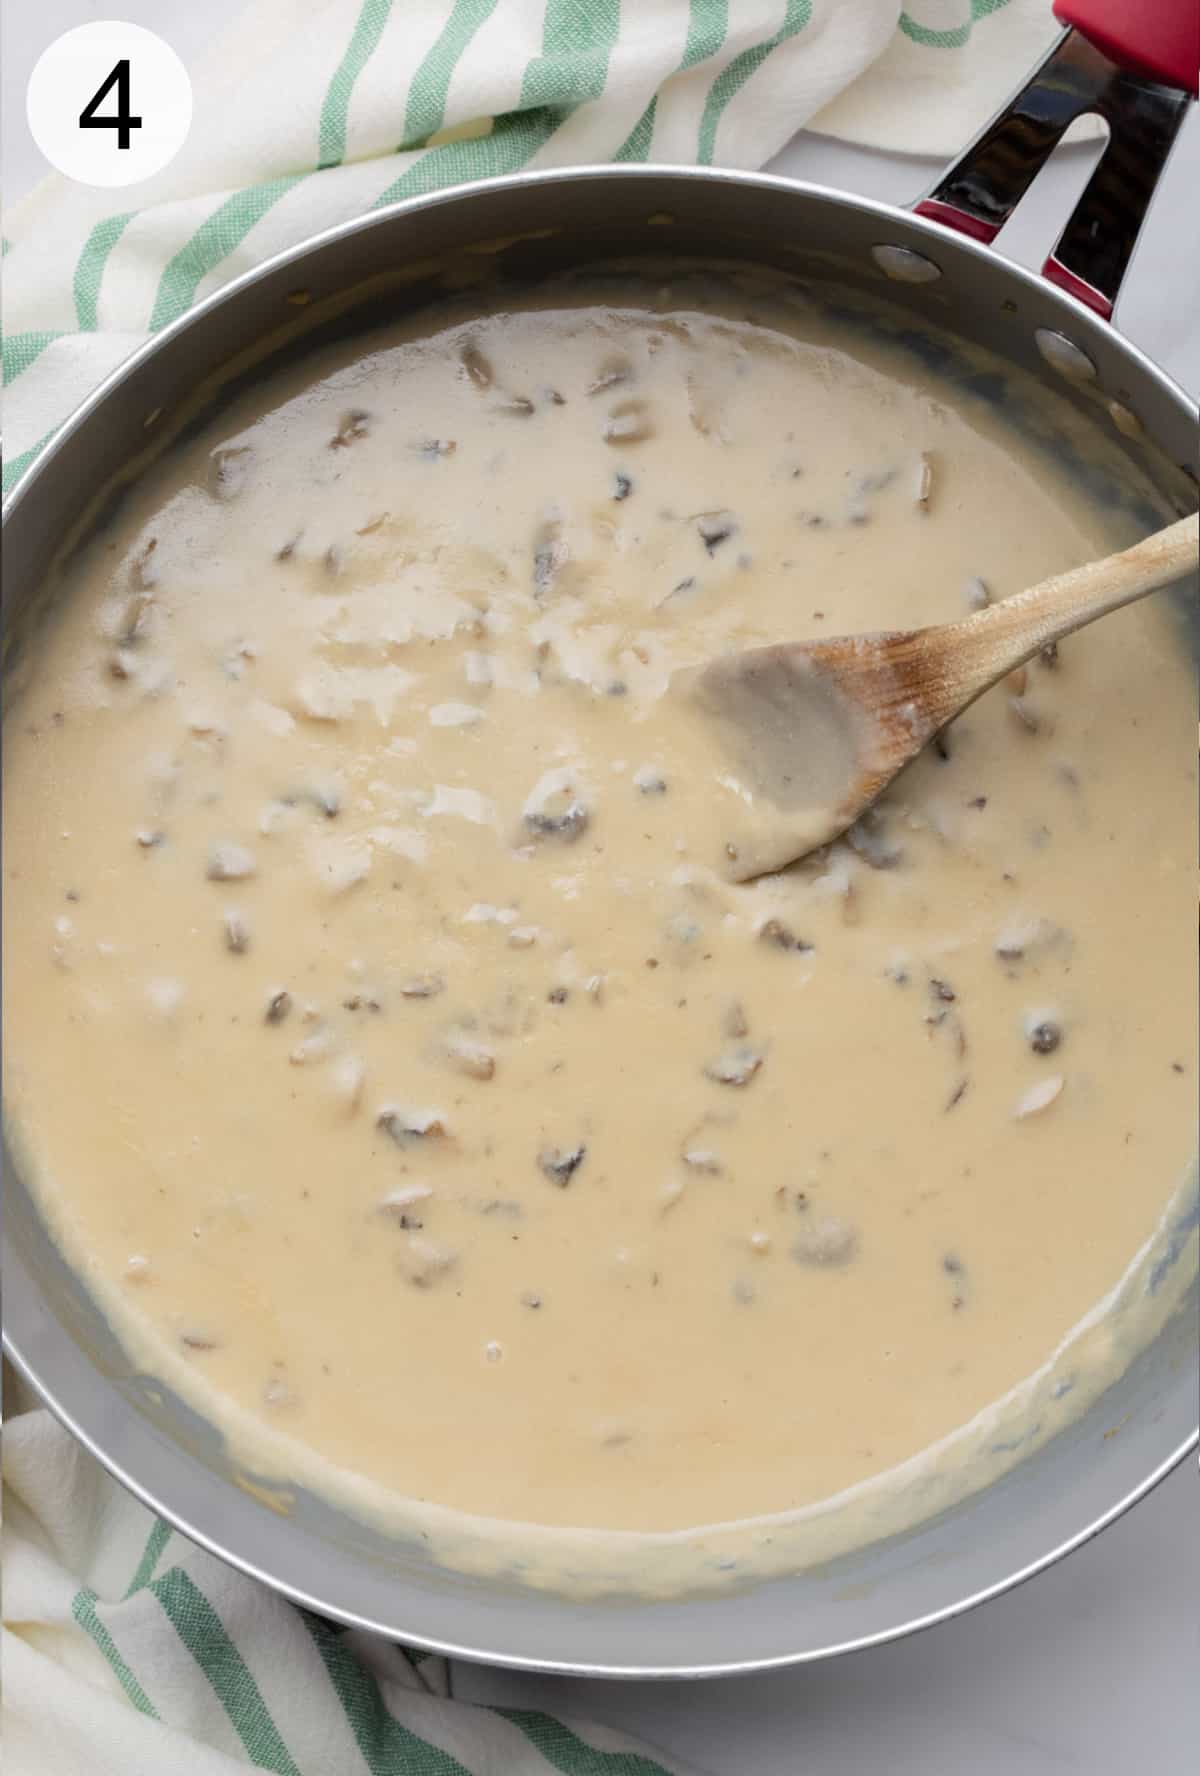 Homemade vegan mushroom gravy in a large pan.